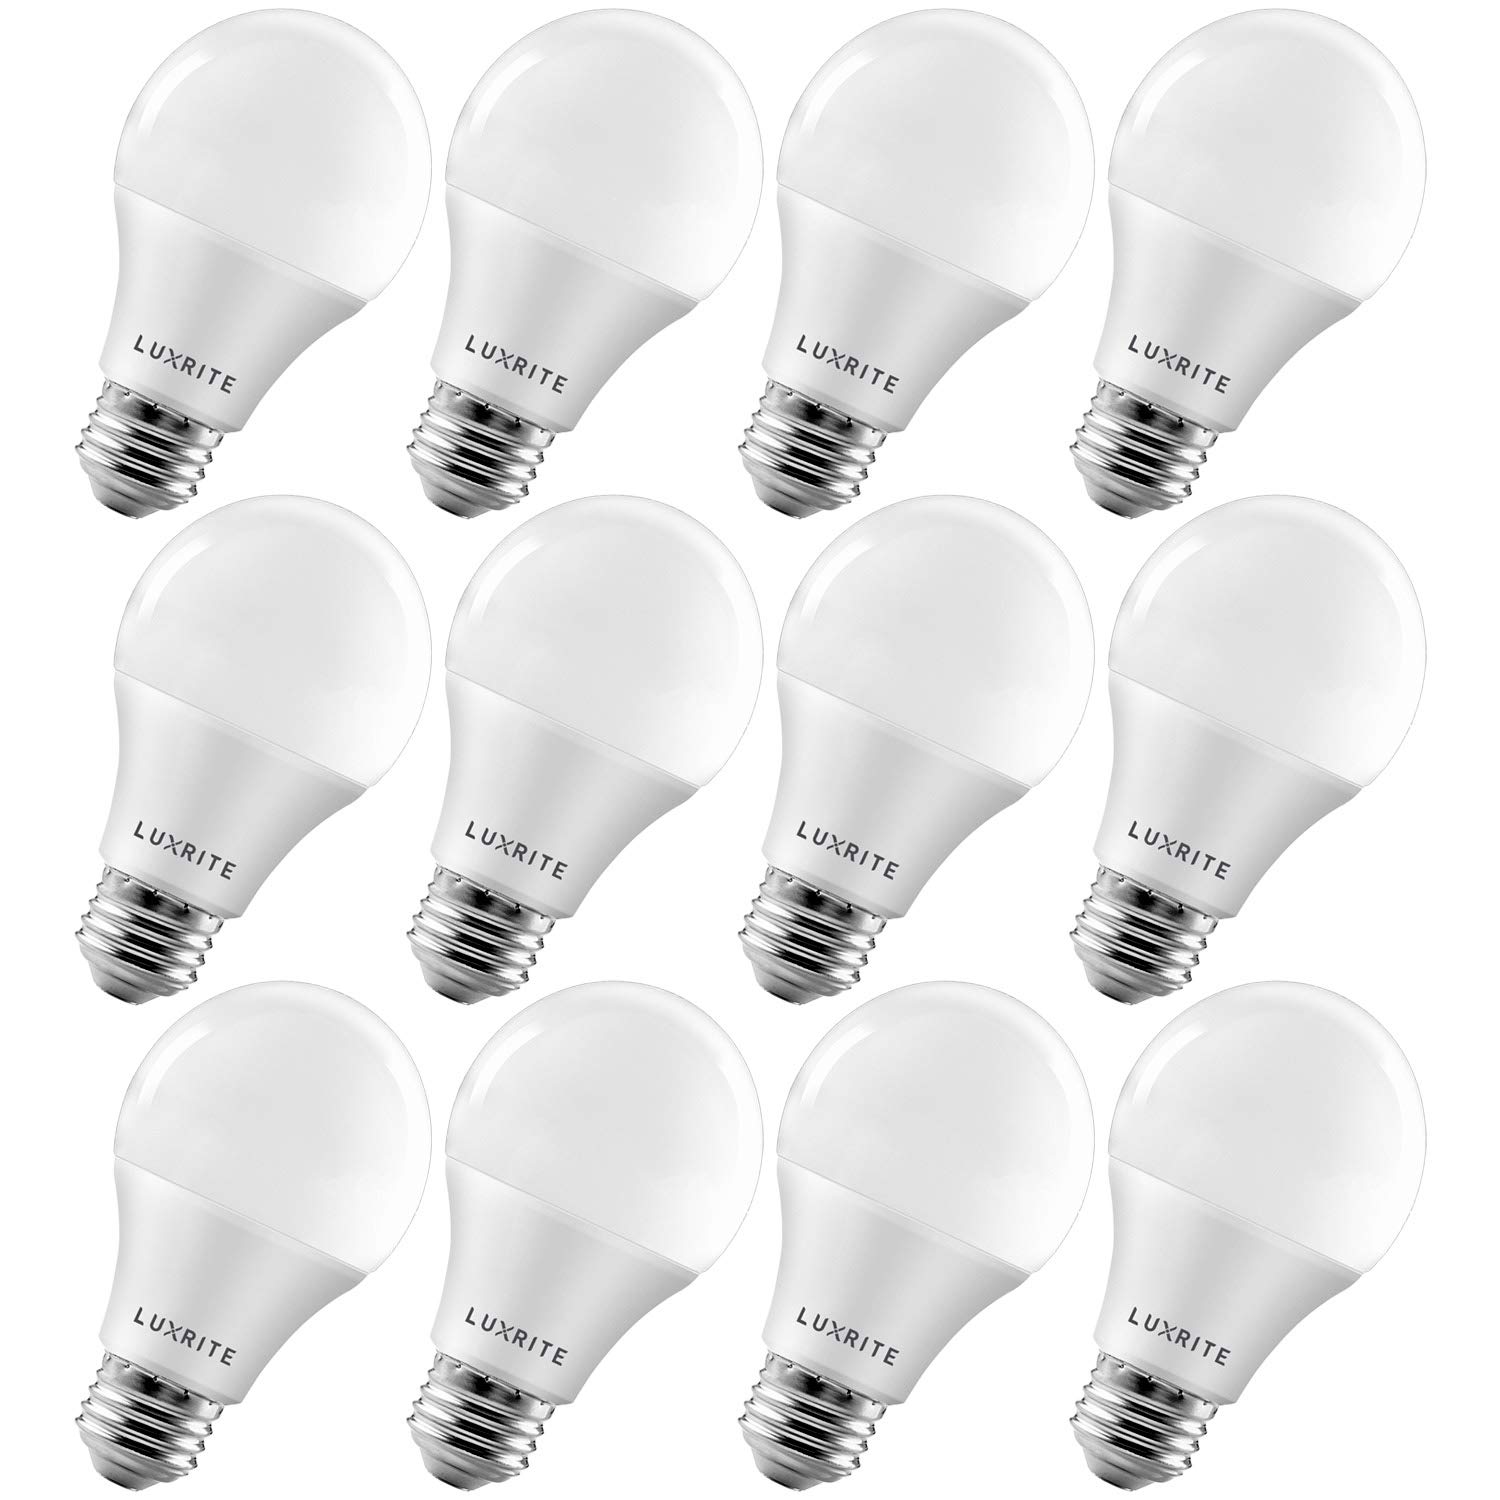 LUXRITE A19 LED Light Bulb 60W Equivalent, 4000K cool White Dimmable, 800 Lumens, Standard LED Bulb 9W, E26 Base, Energy Star, E